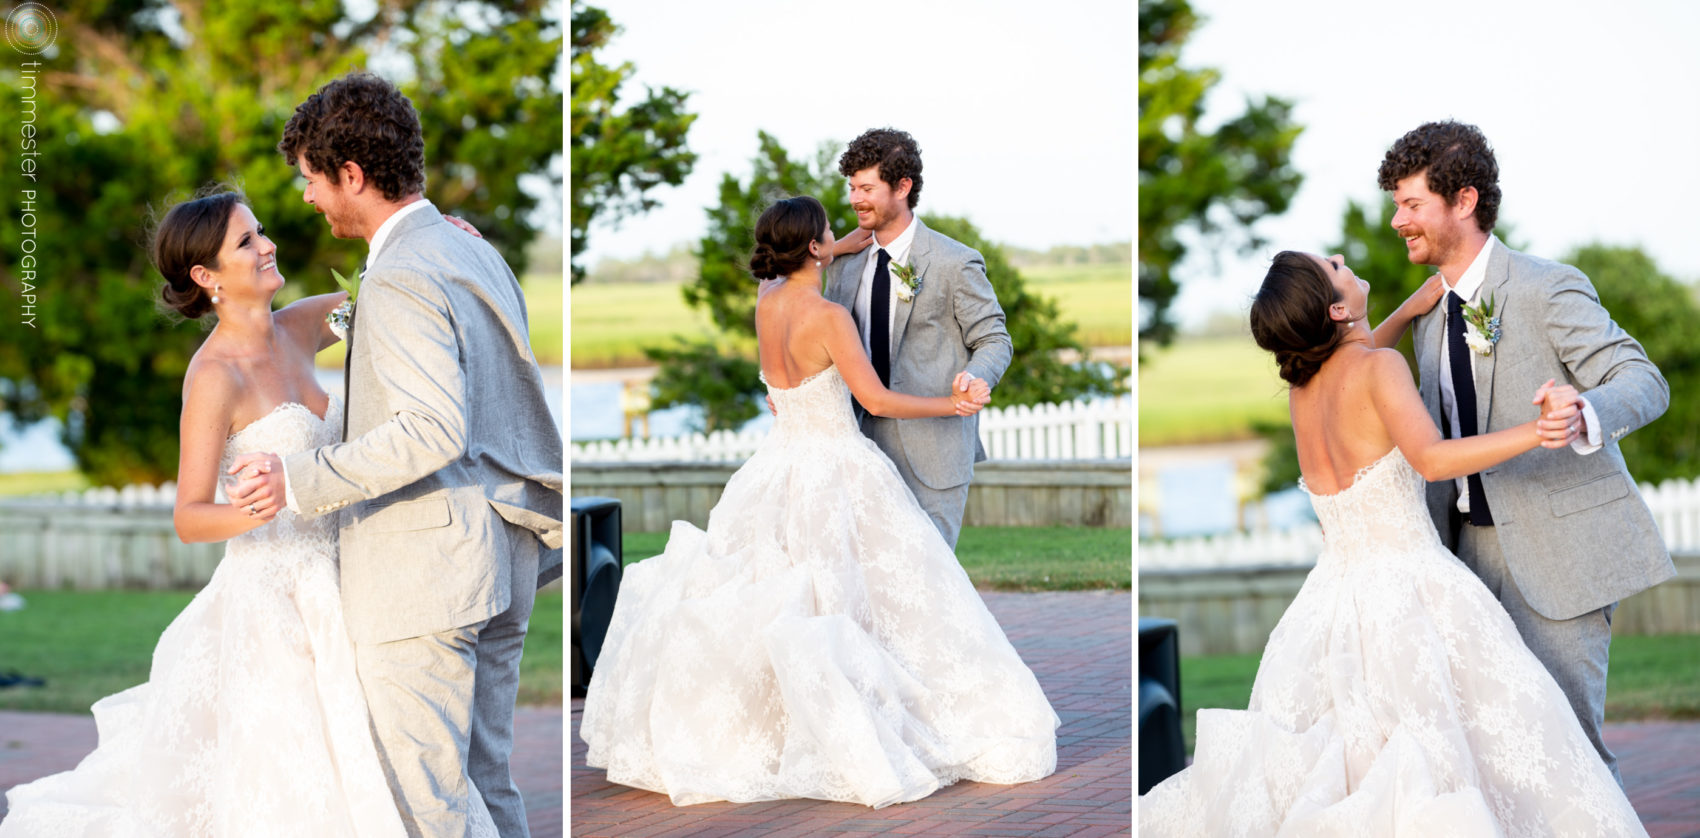 A beach wedding followed by an outdoor reception at Bald Head Island, NC